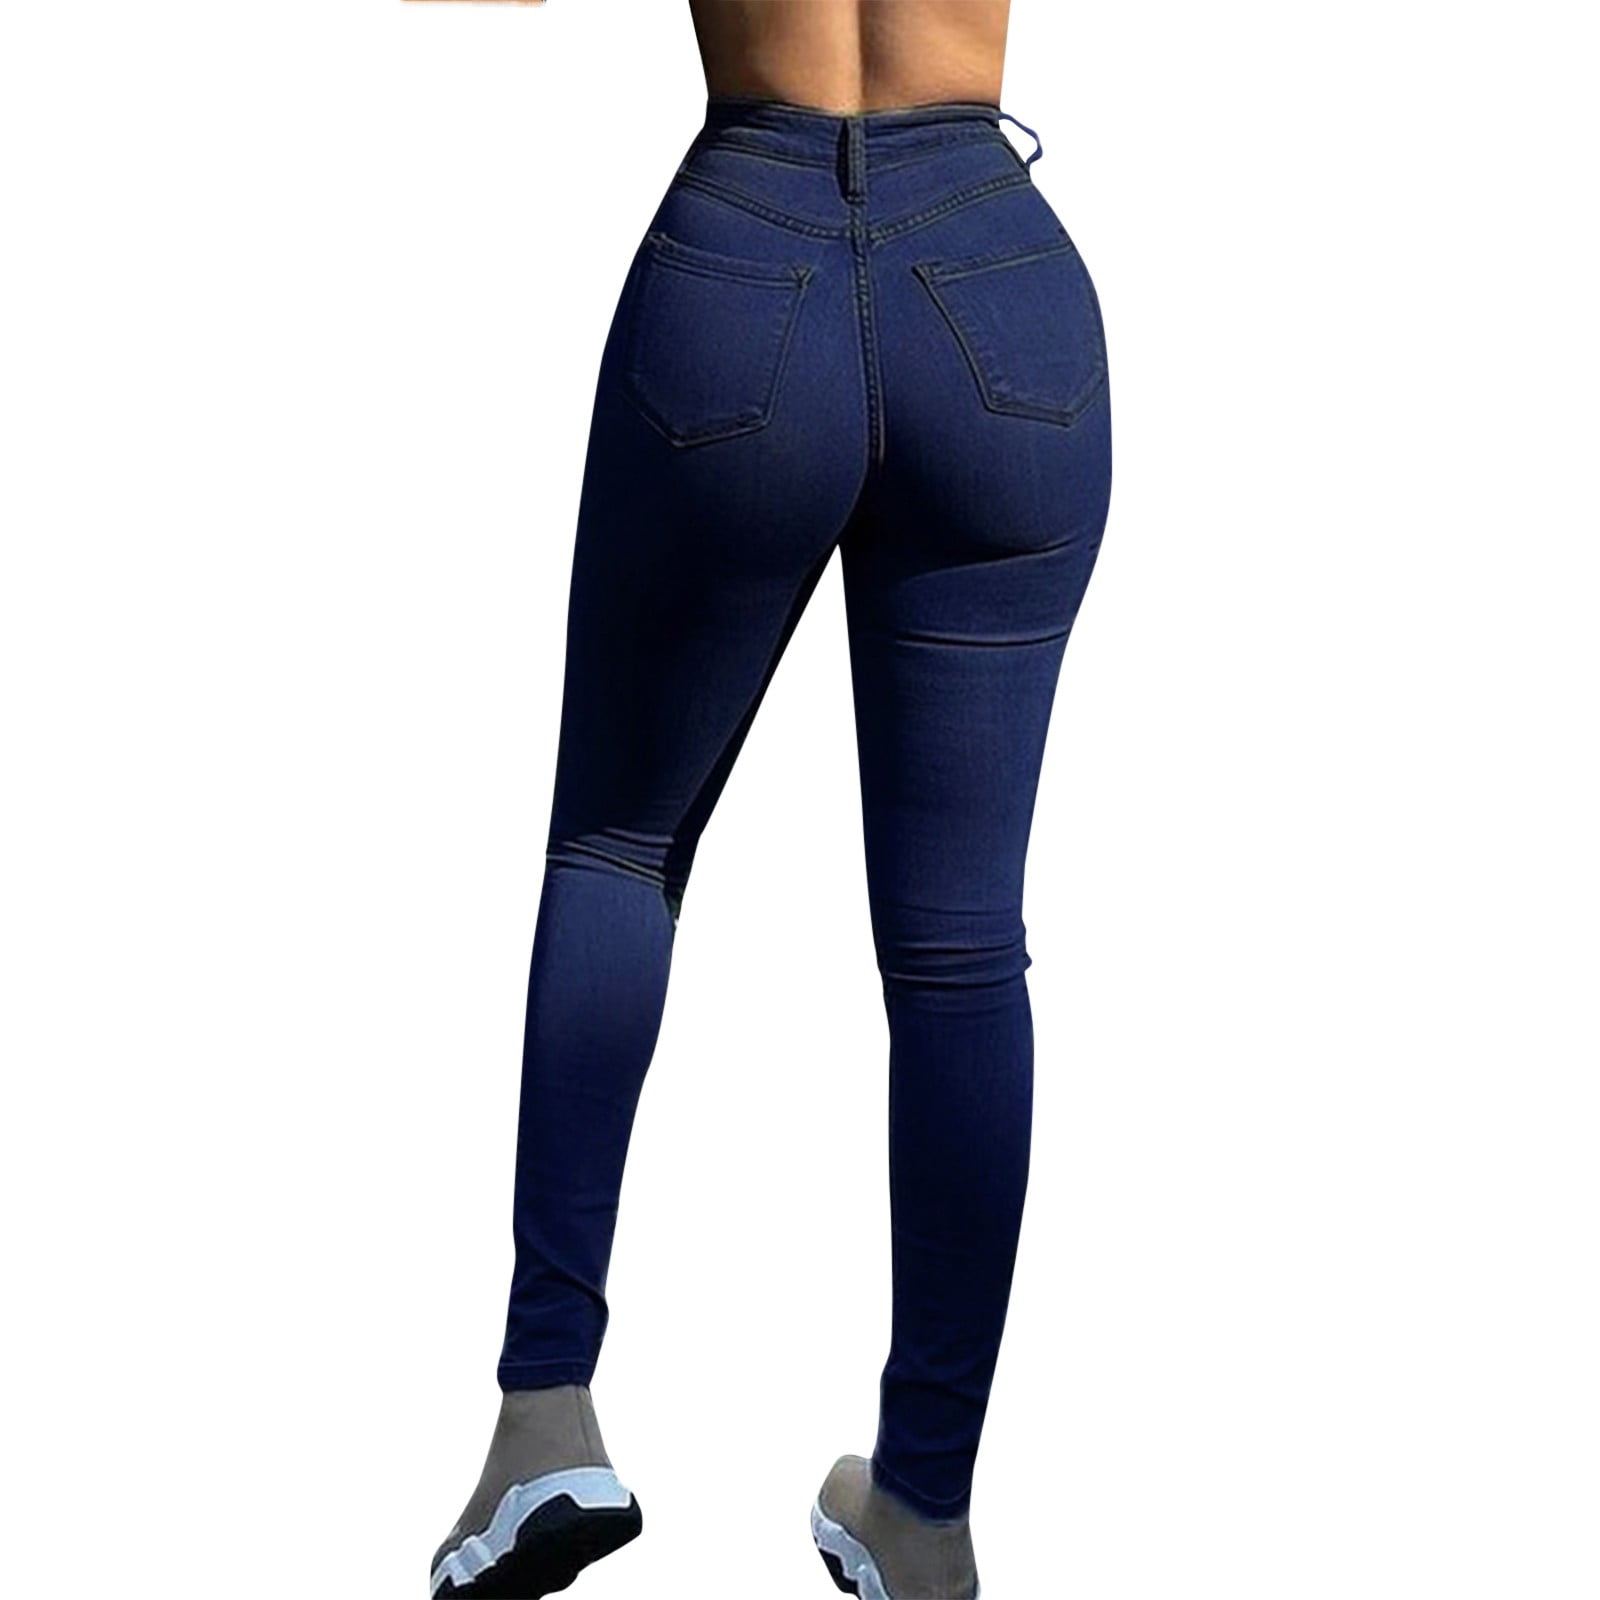 Durtebeua Tummy Control Jeans For Women Stretchy Shaping Leg Jean Blue M 